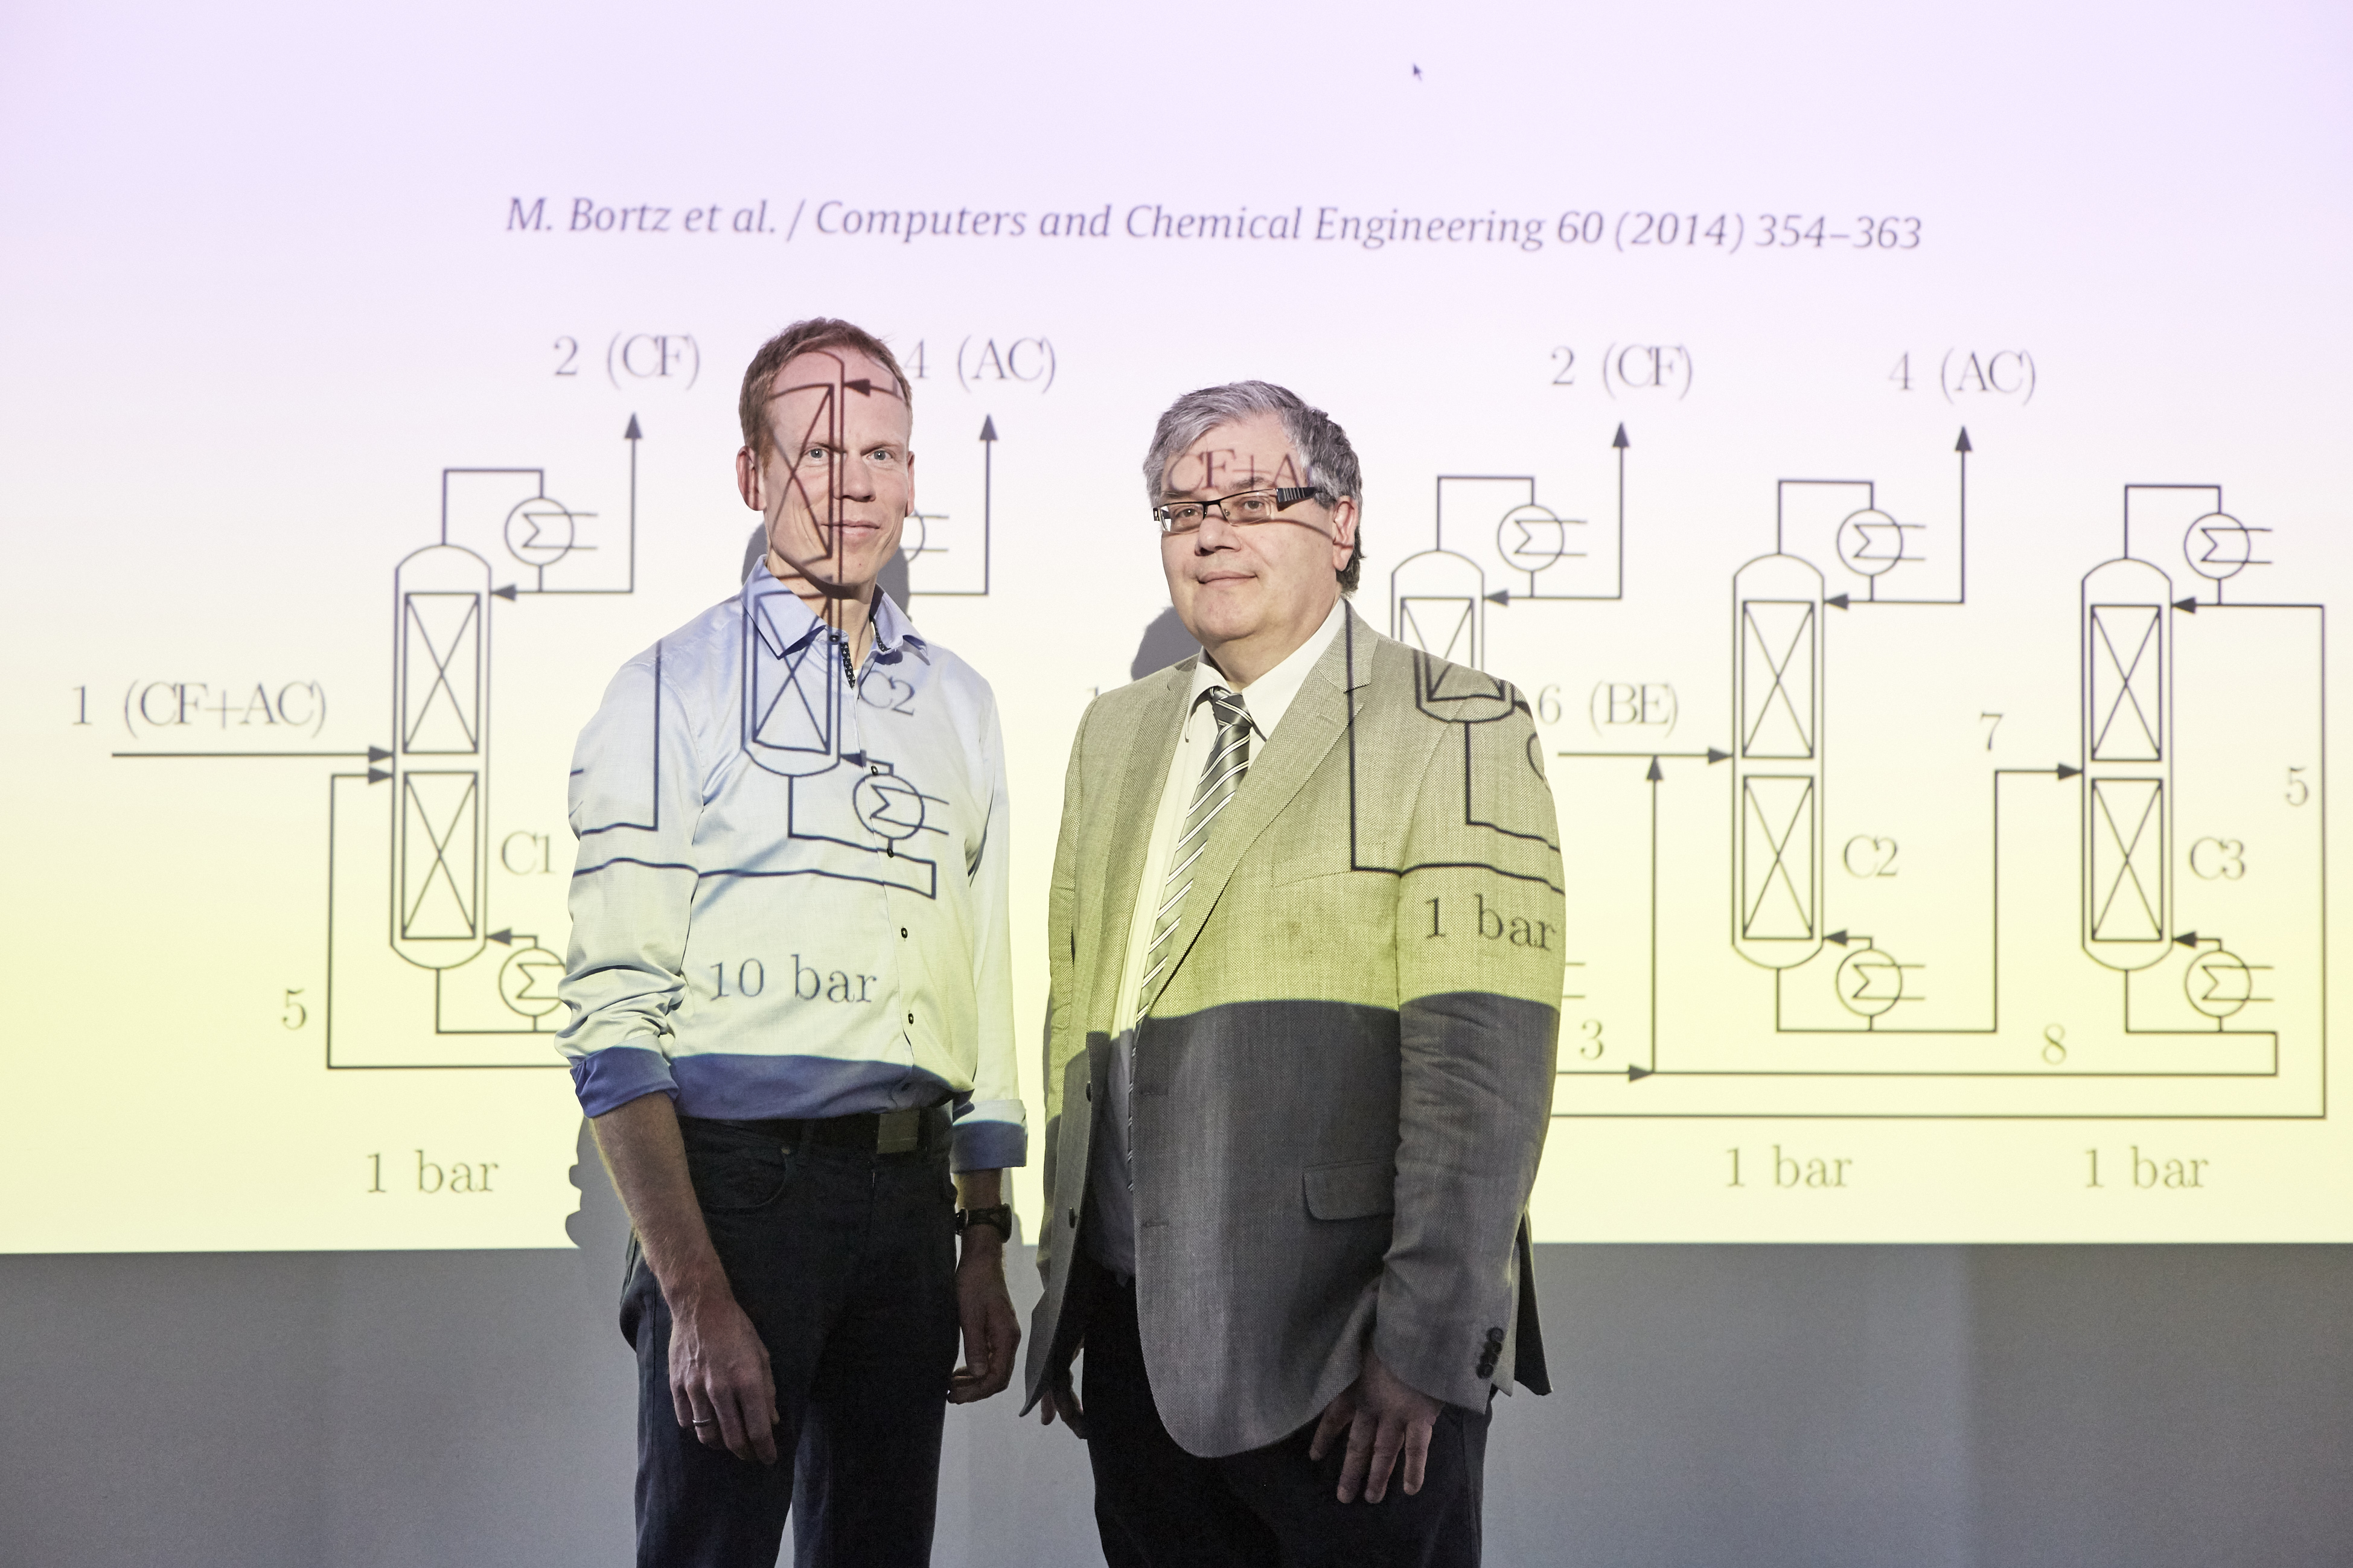 Bortz and Küfer of the Fraunhofer ITWM receive the Joseph von Fraunhofer Prize